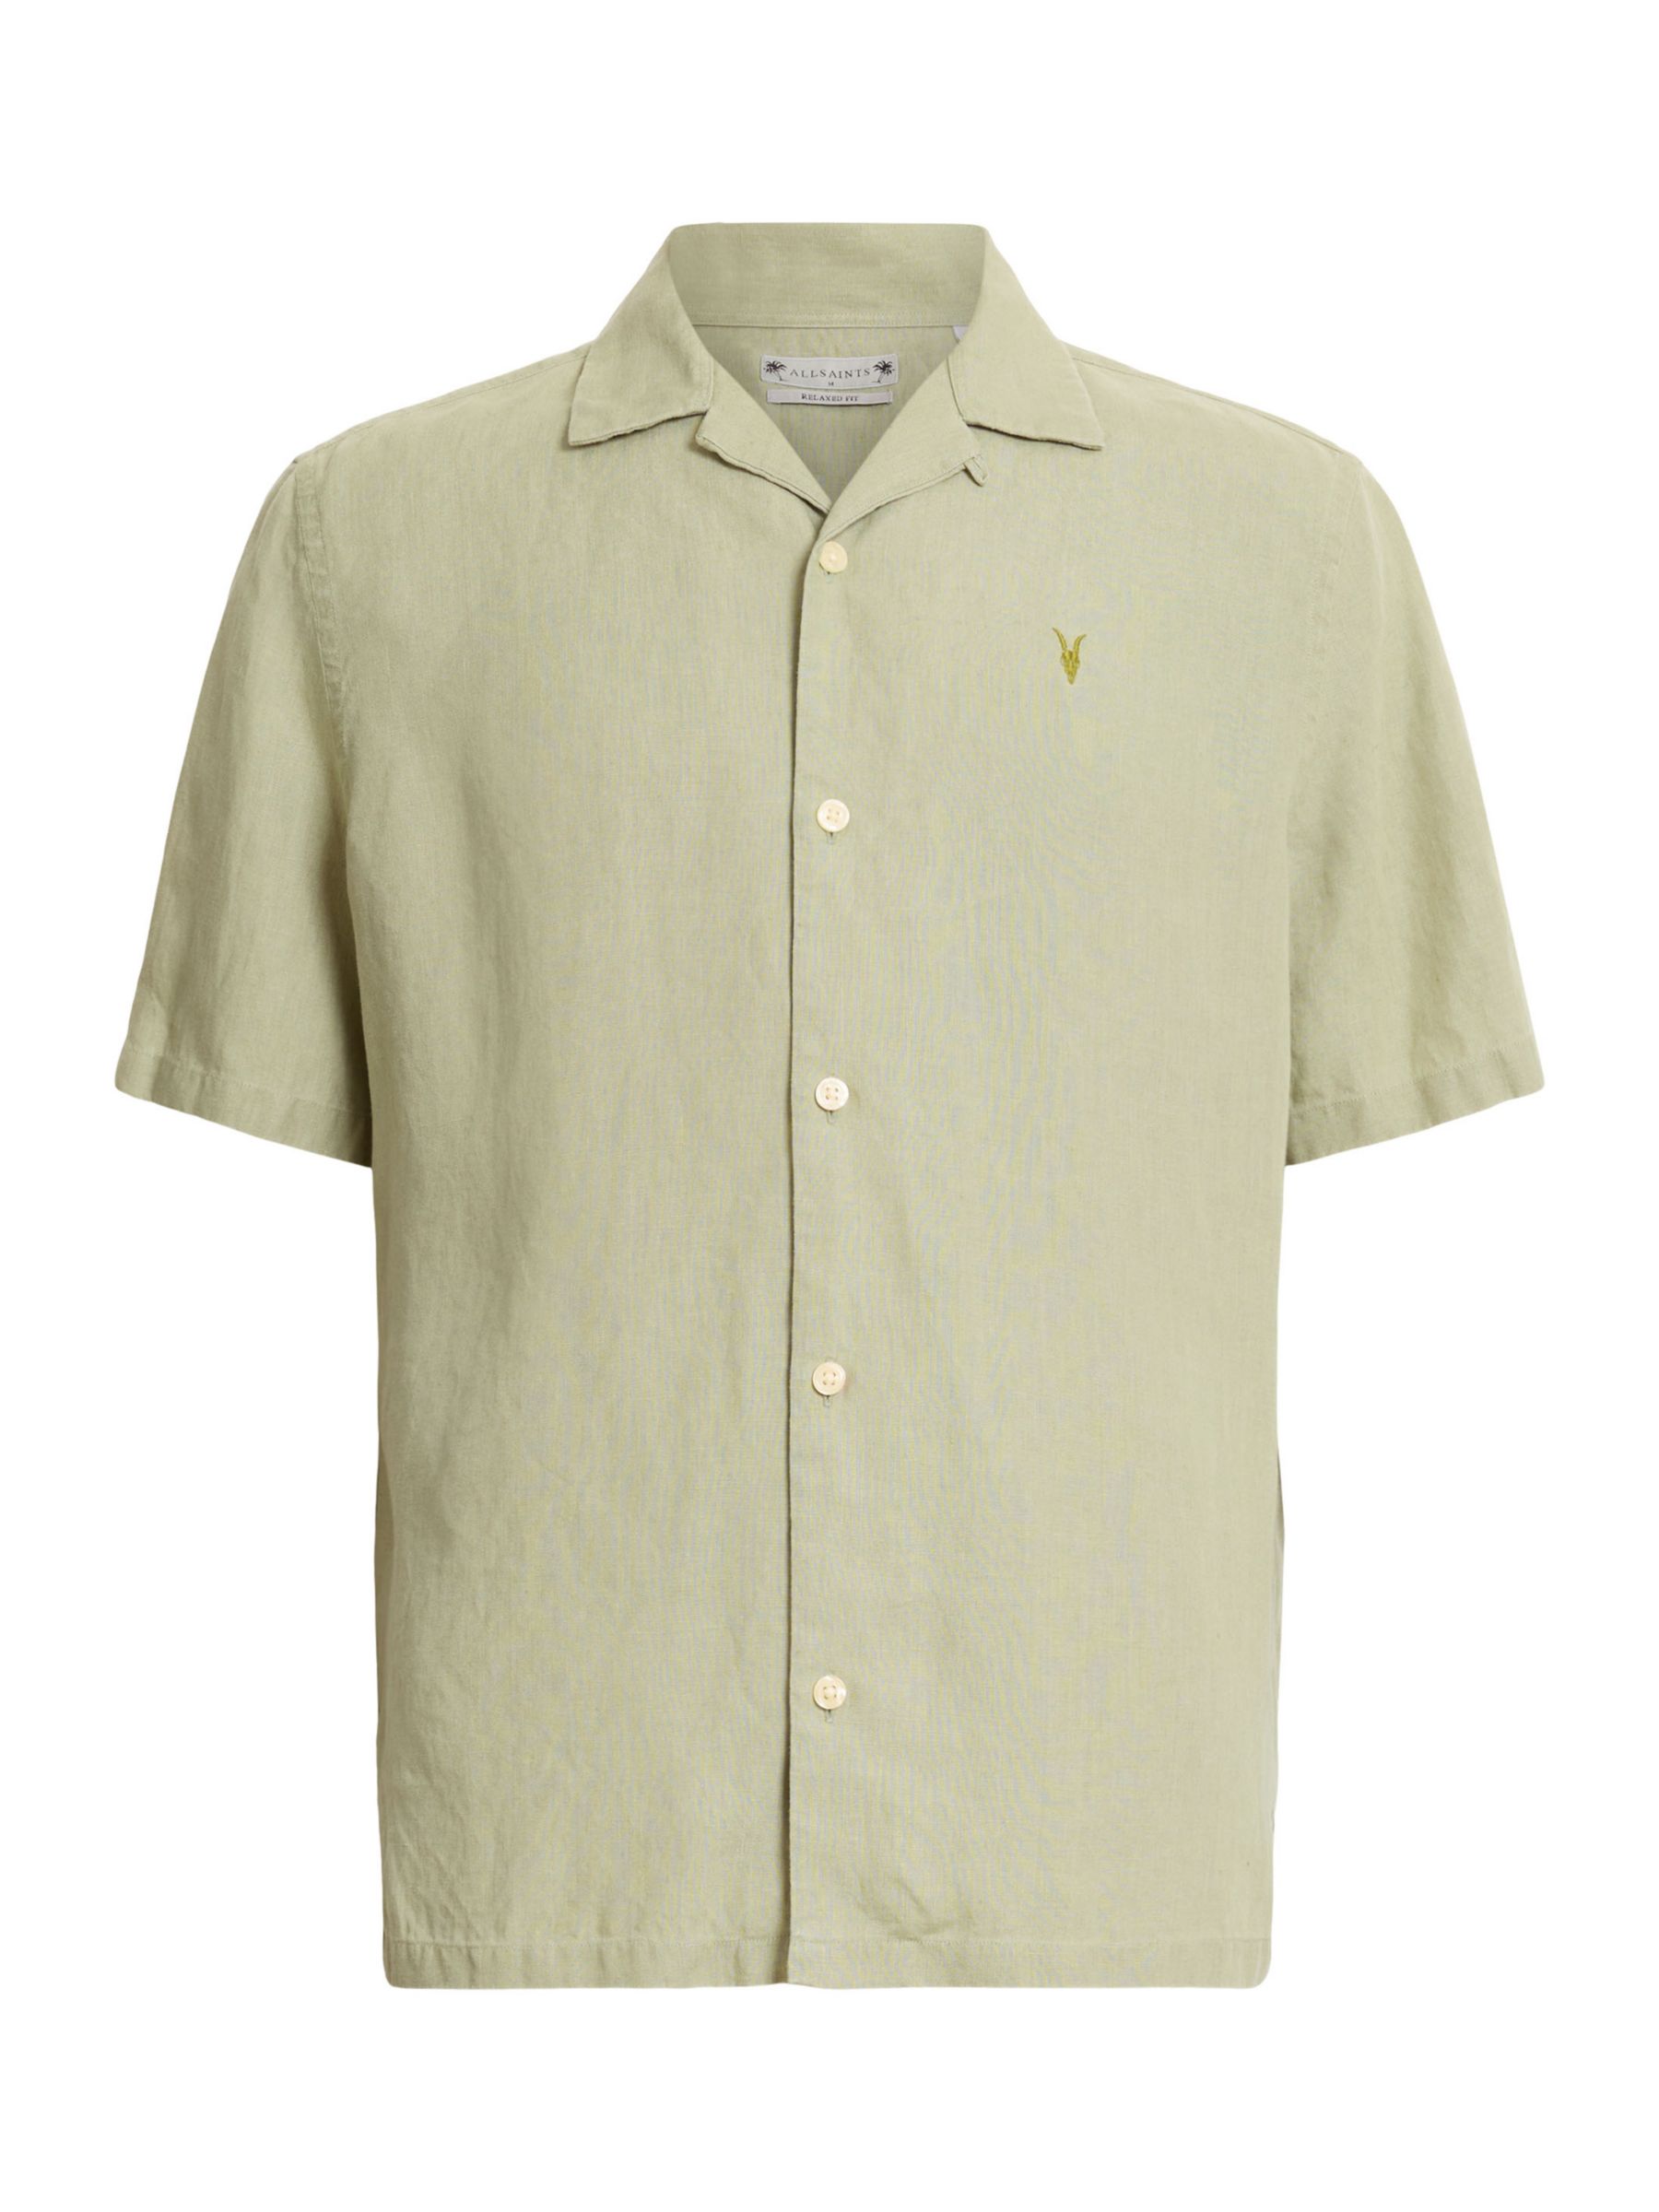 Buy AllSaints Audley Short Sleeve Shirt Online at johnlewis.com